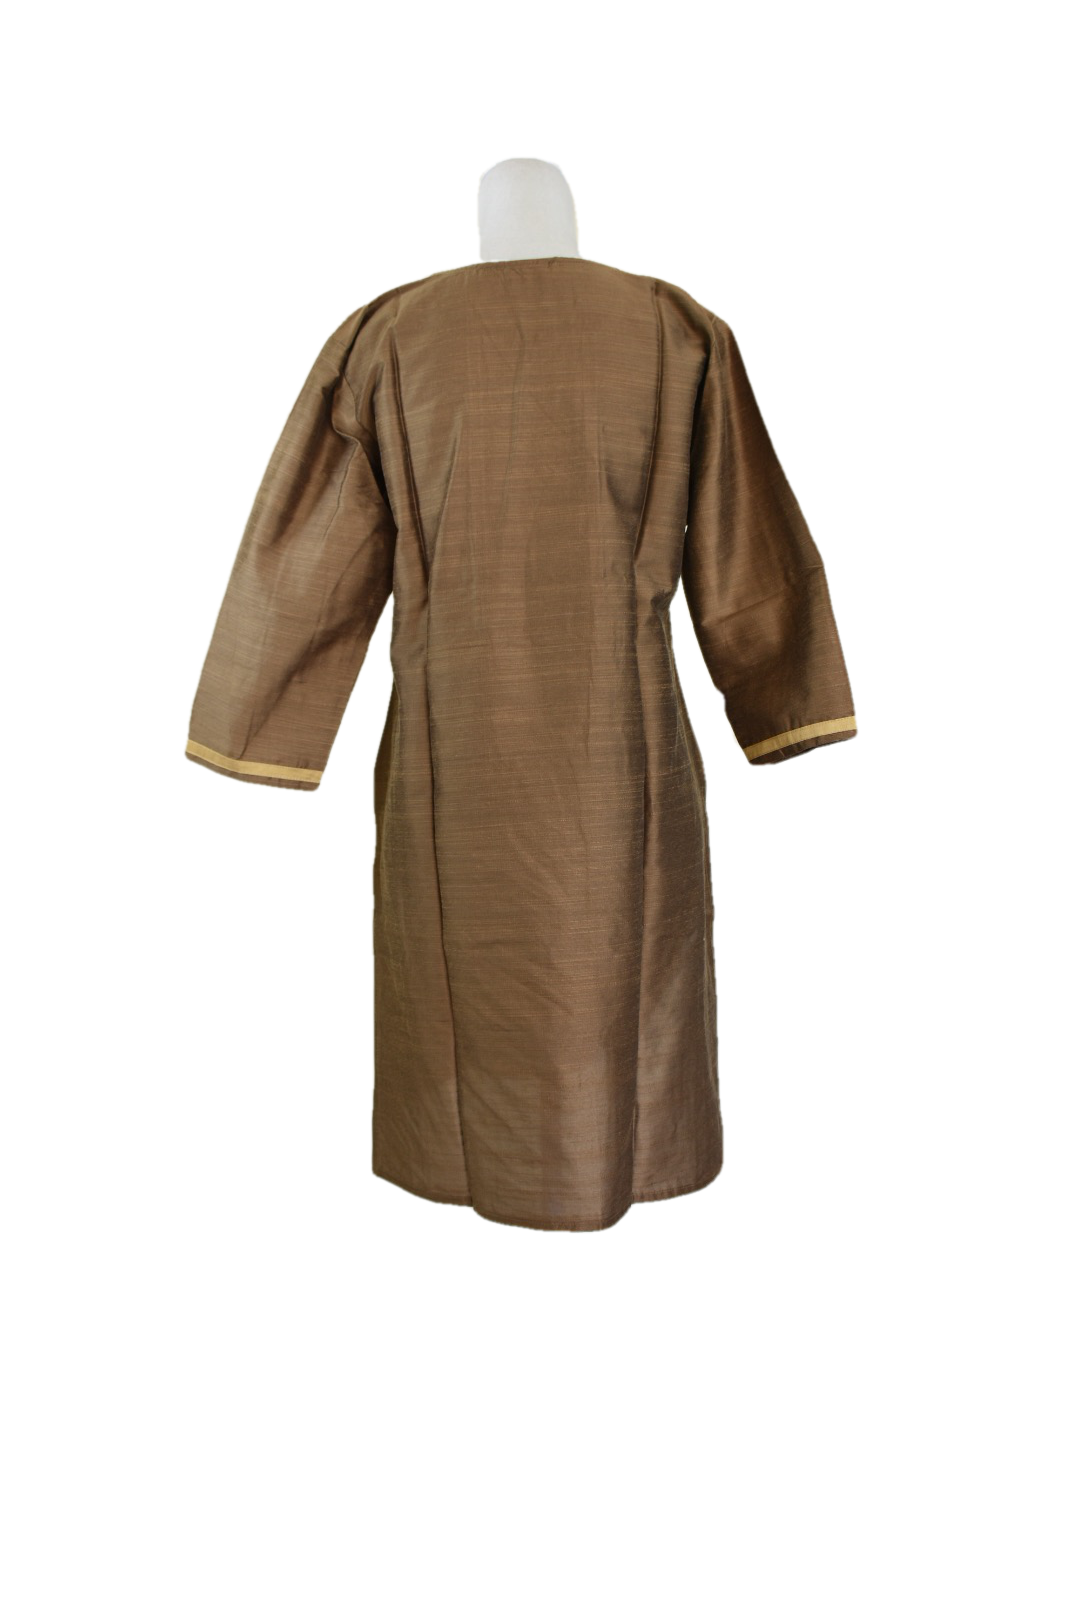 Rust Brown Color - Pure Raw Silk Kurti TunicSize Small/Medium - 30/32